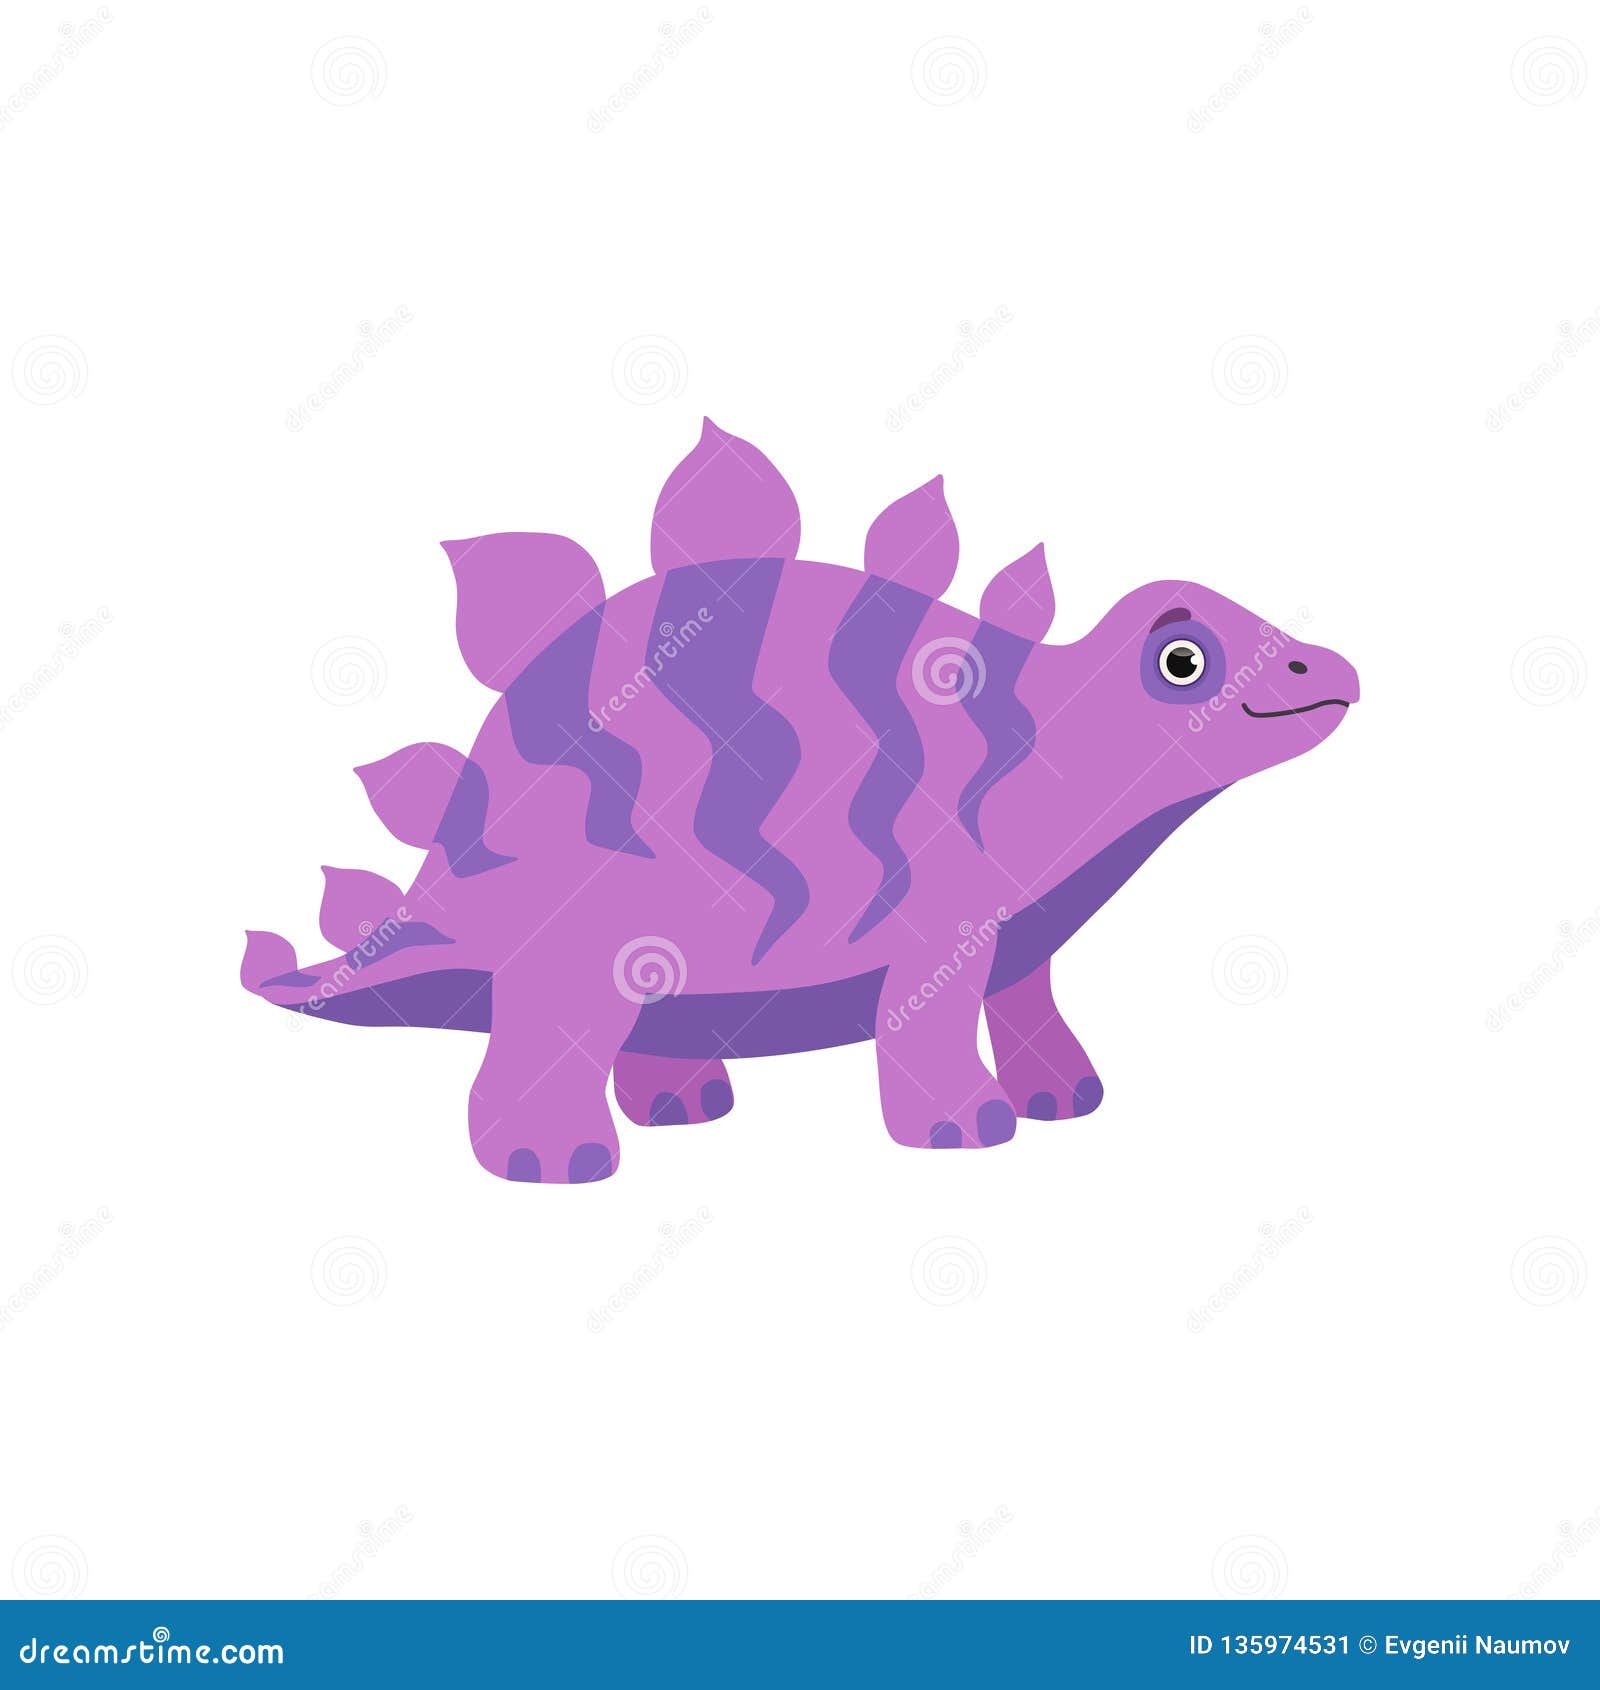 Cute Stegosaurus Dinosaur, Purple Baby Dino Cartoon Character Vector  Illustration Stock Vector - Illustration of figure, graphic: 135974531